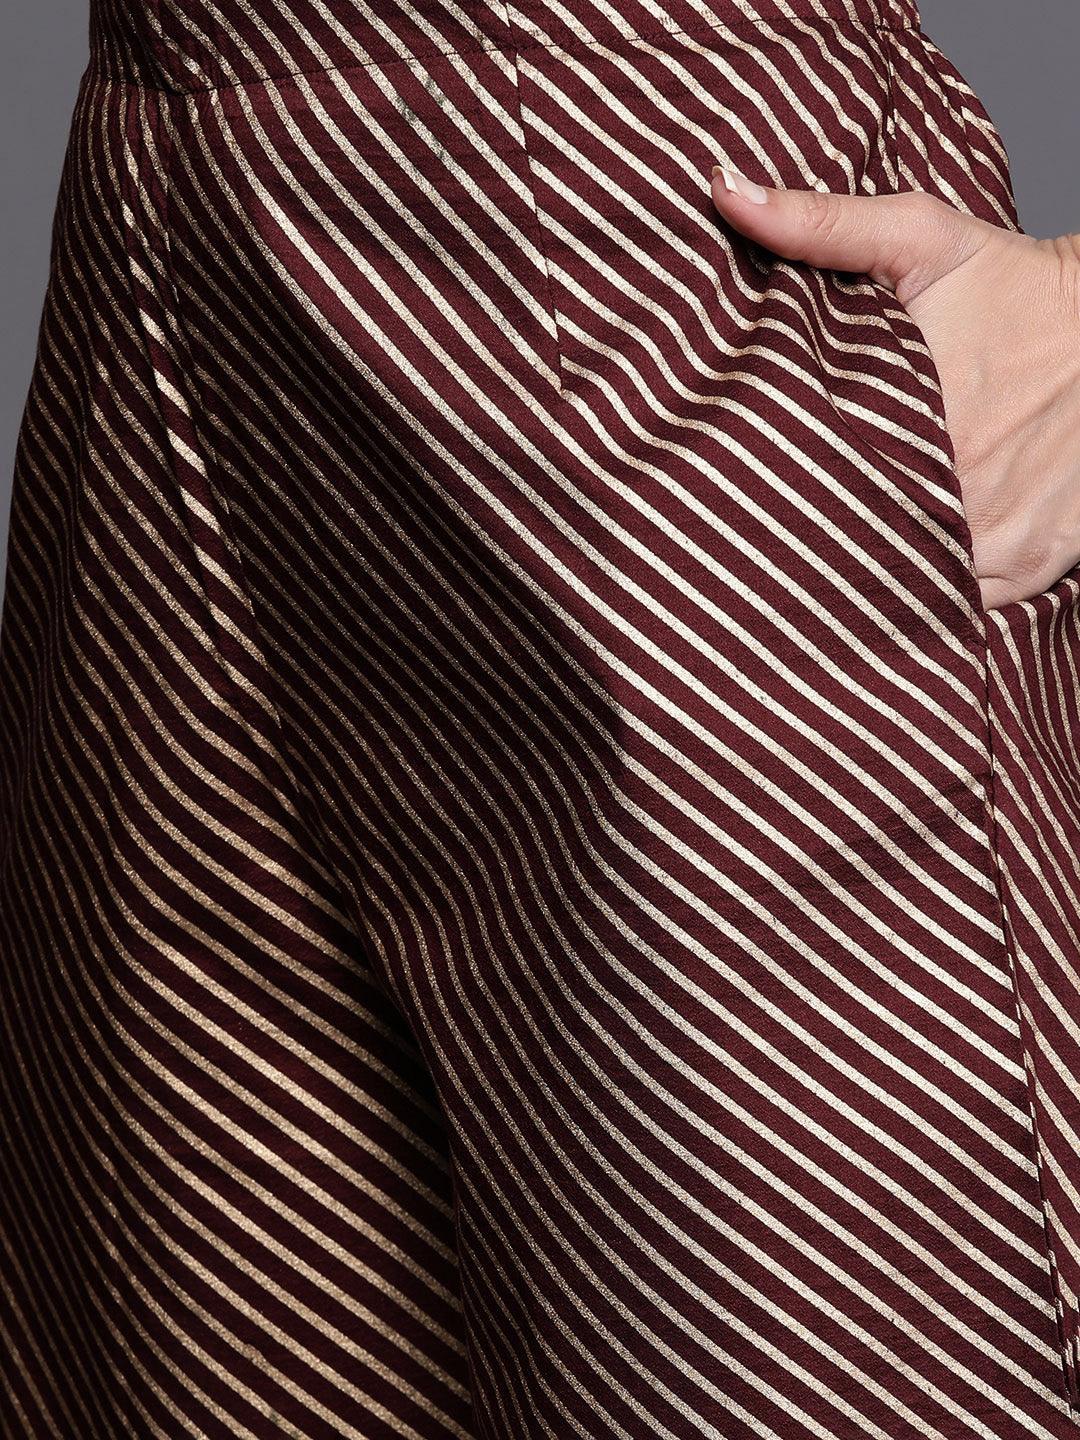 Maroon Yoke Design Silk Blend Straight Suit Set - Libas